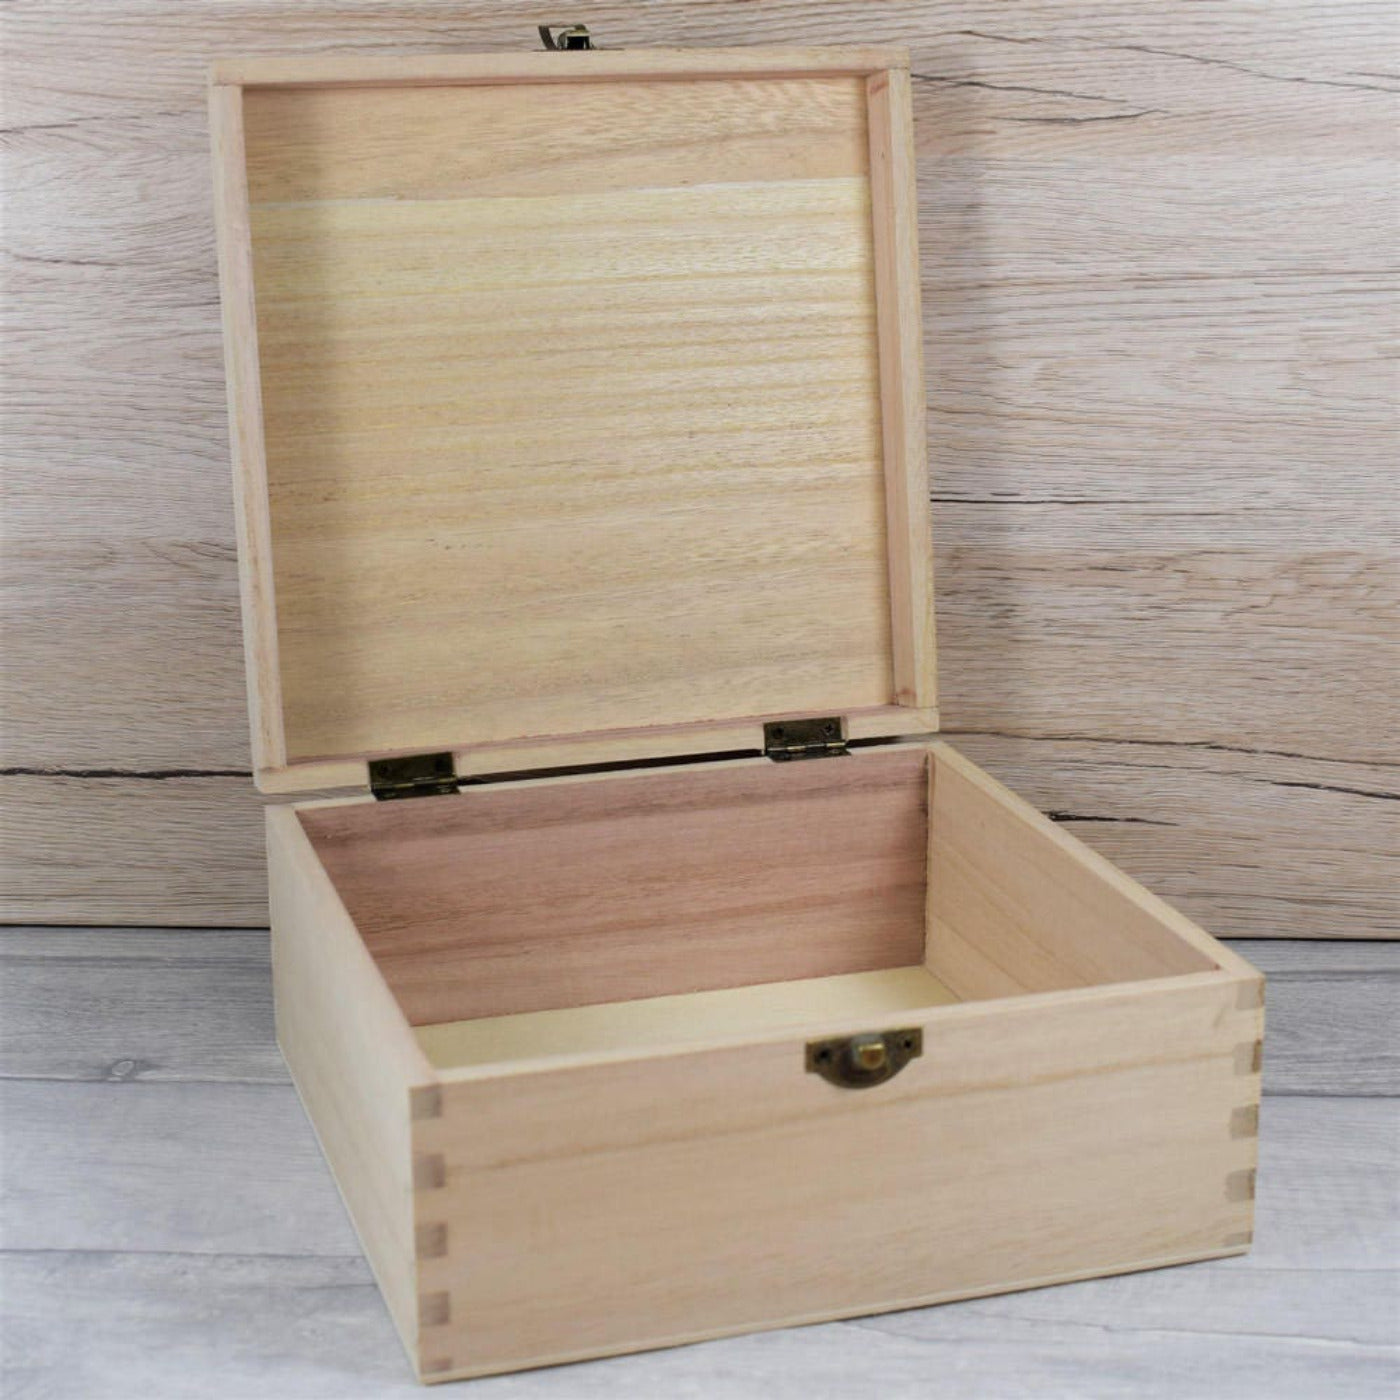 Personalised Wooden Keepsake Box - Grandma's Sweet Box